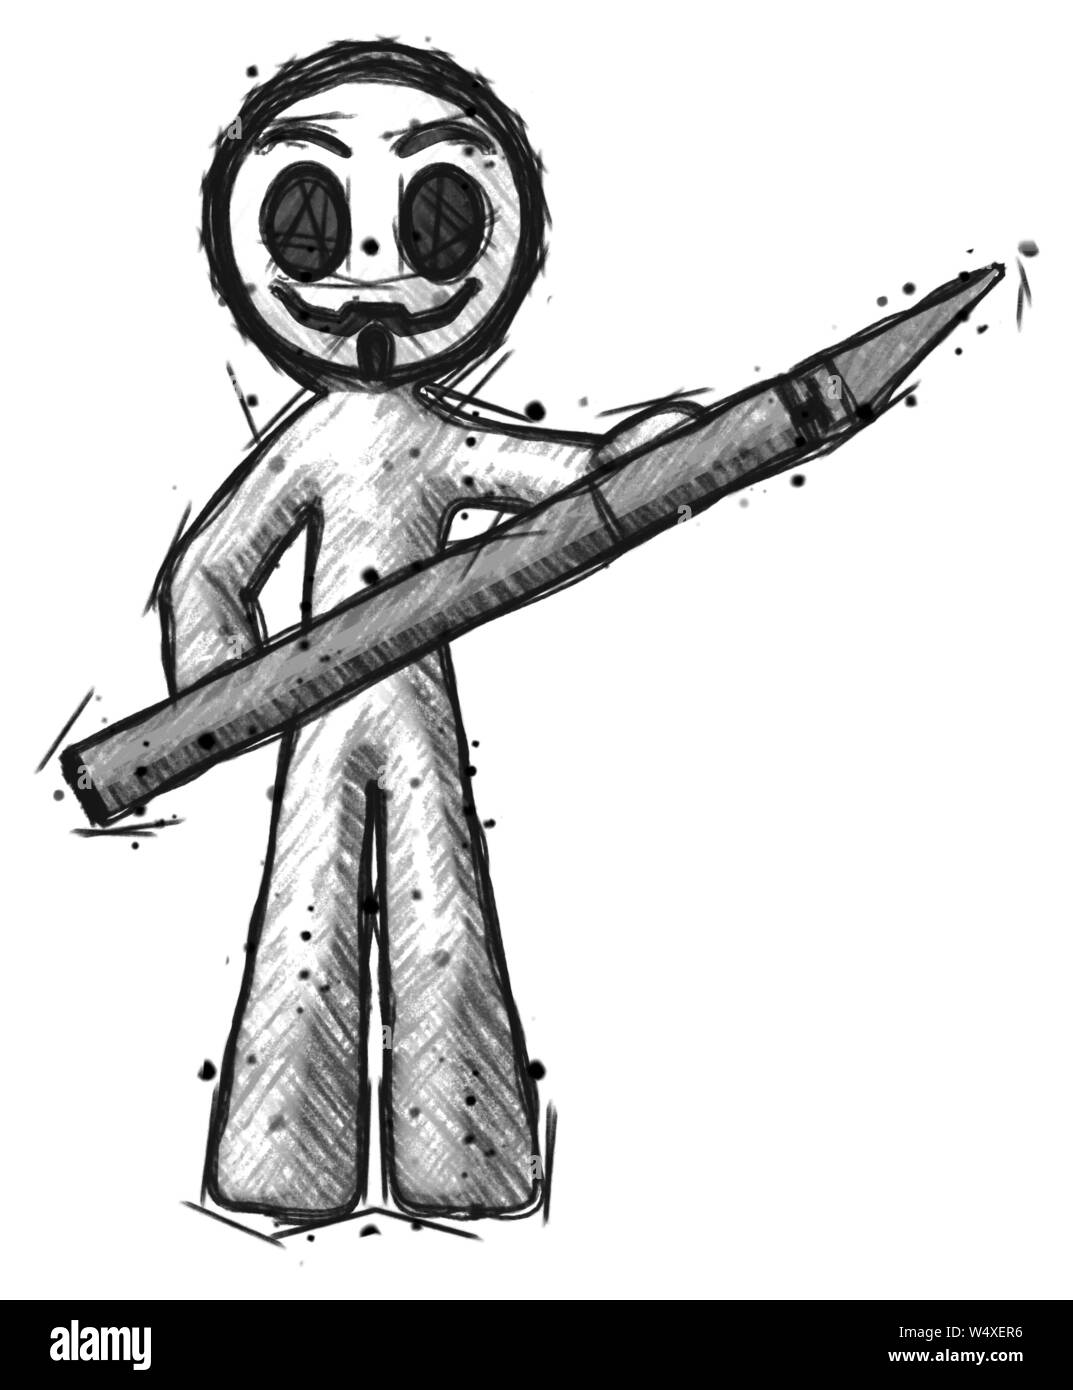 Sketch little anarchist hacker man holding large scalpel. Stock Photo